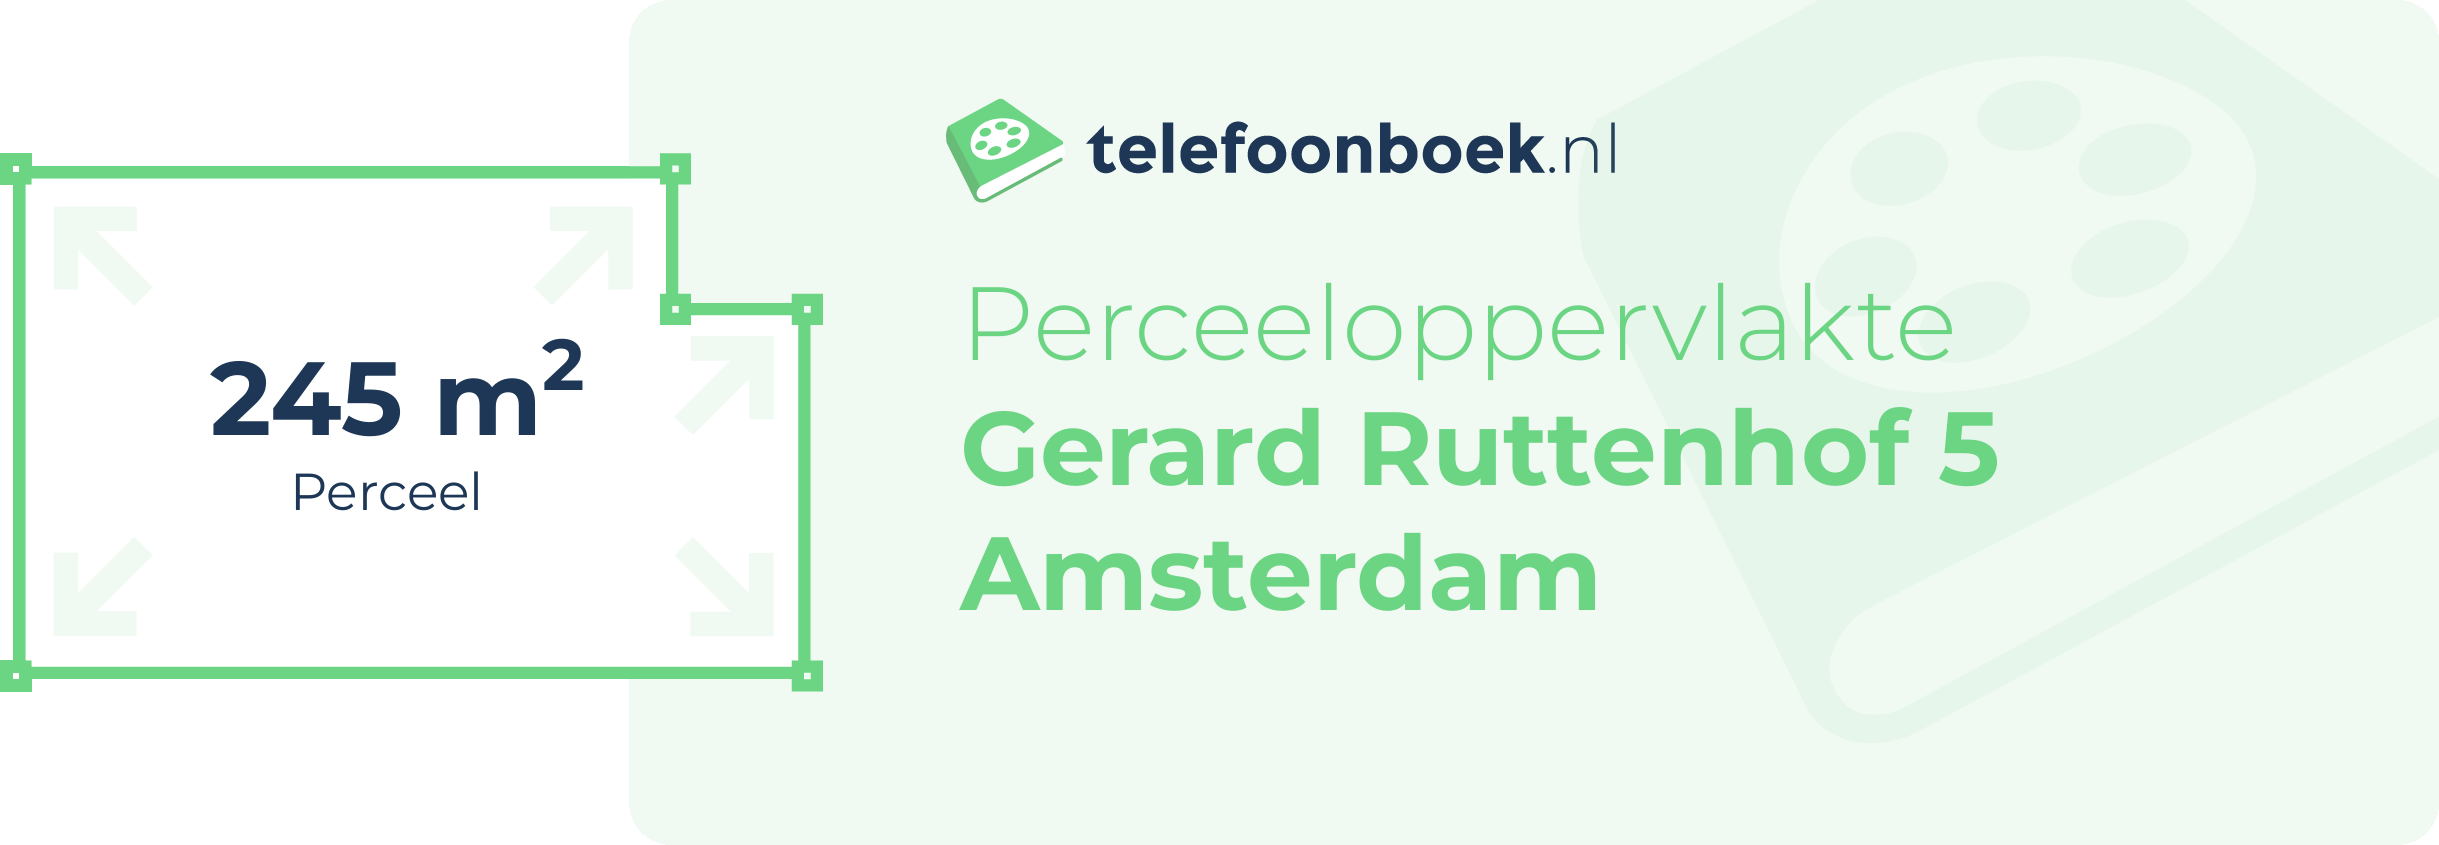 Perceeloppervlakte Gerard Ruttenhof 5 Amsterdam